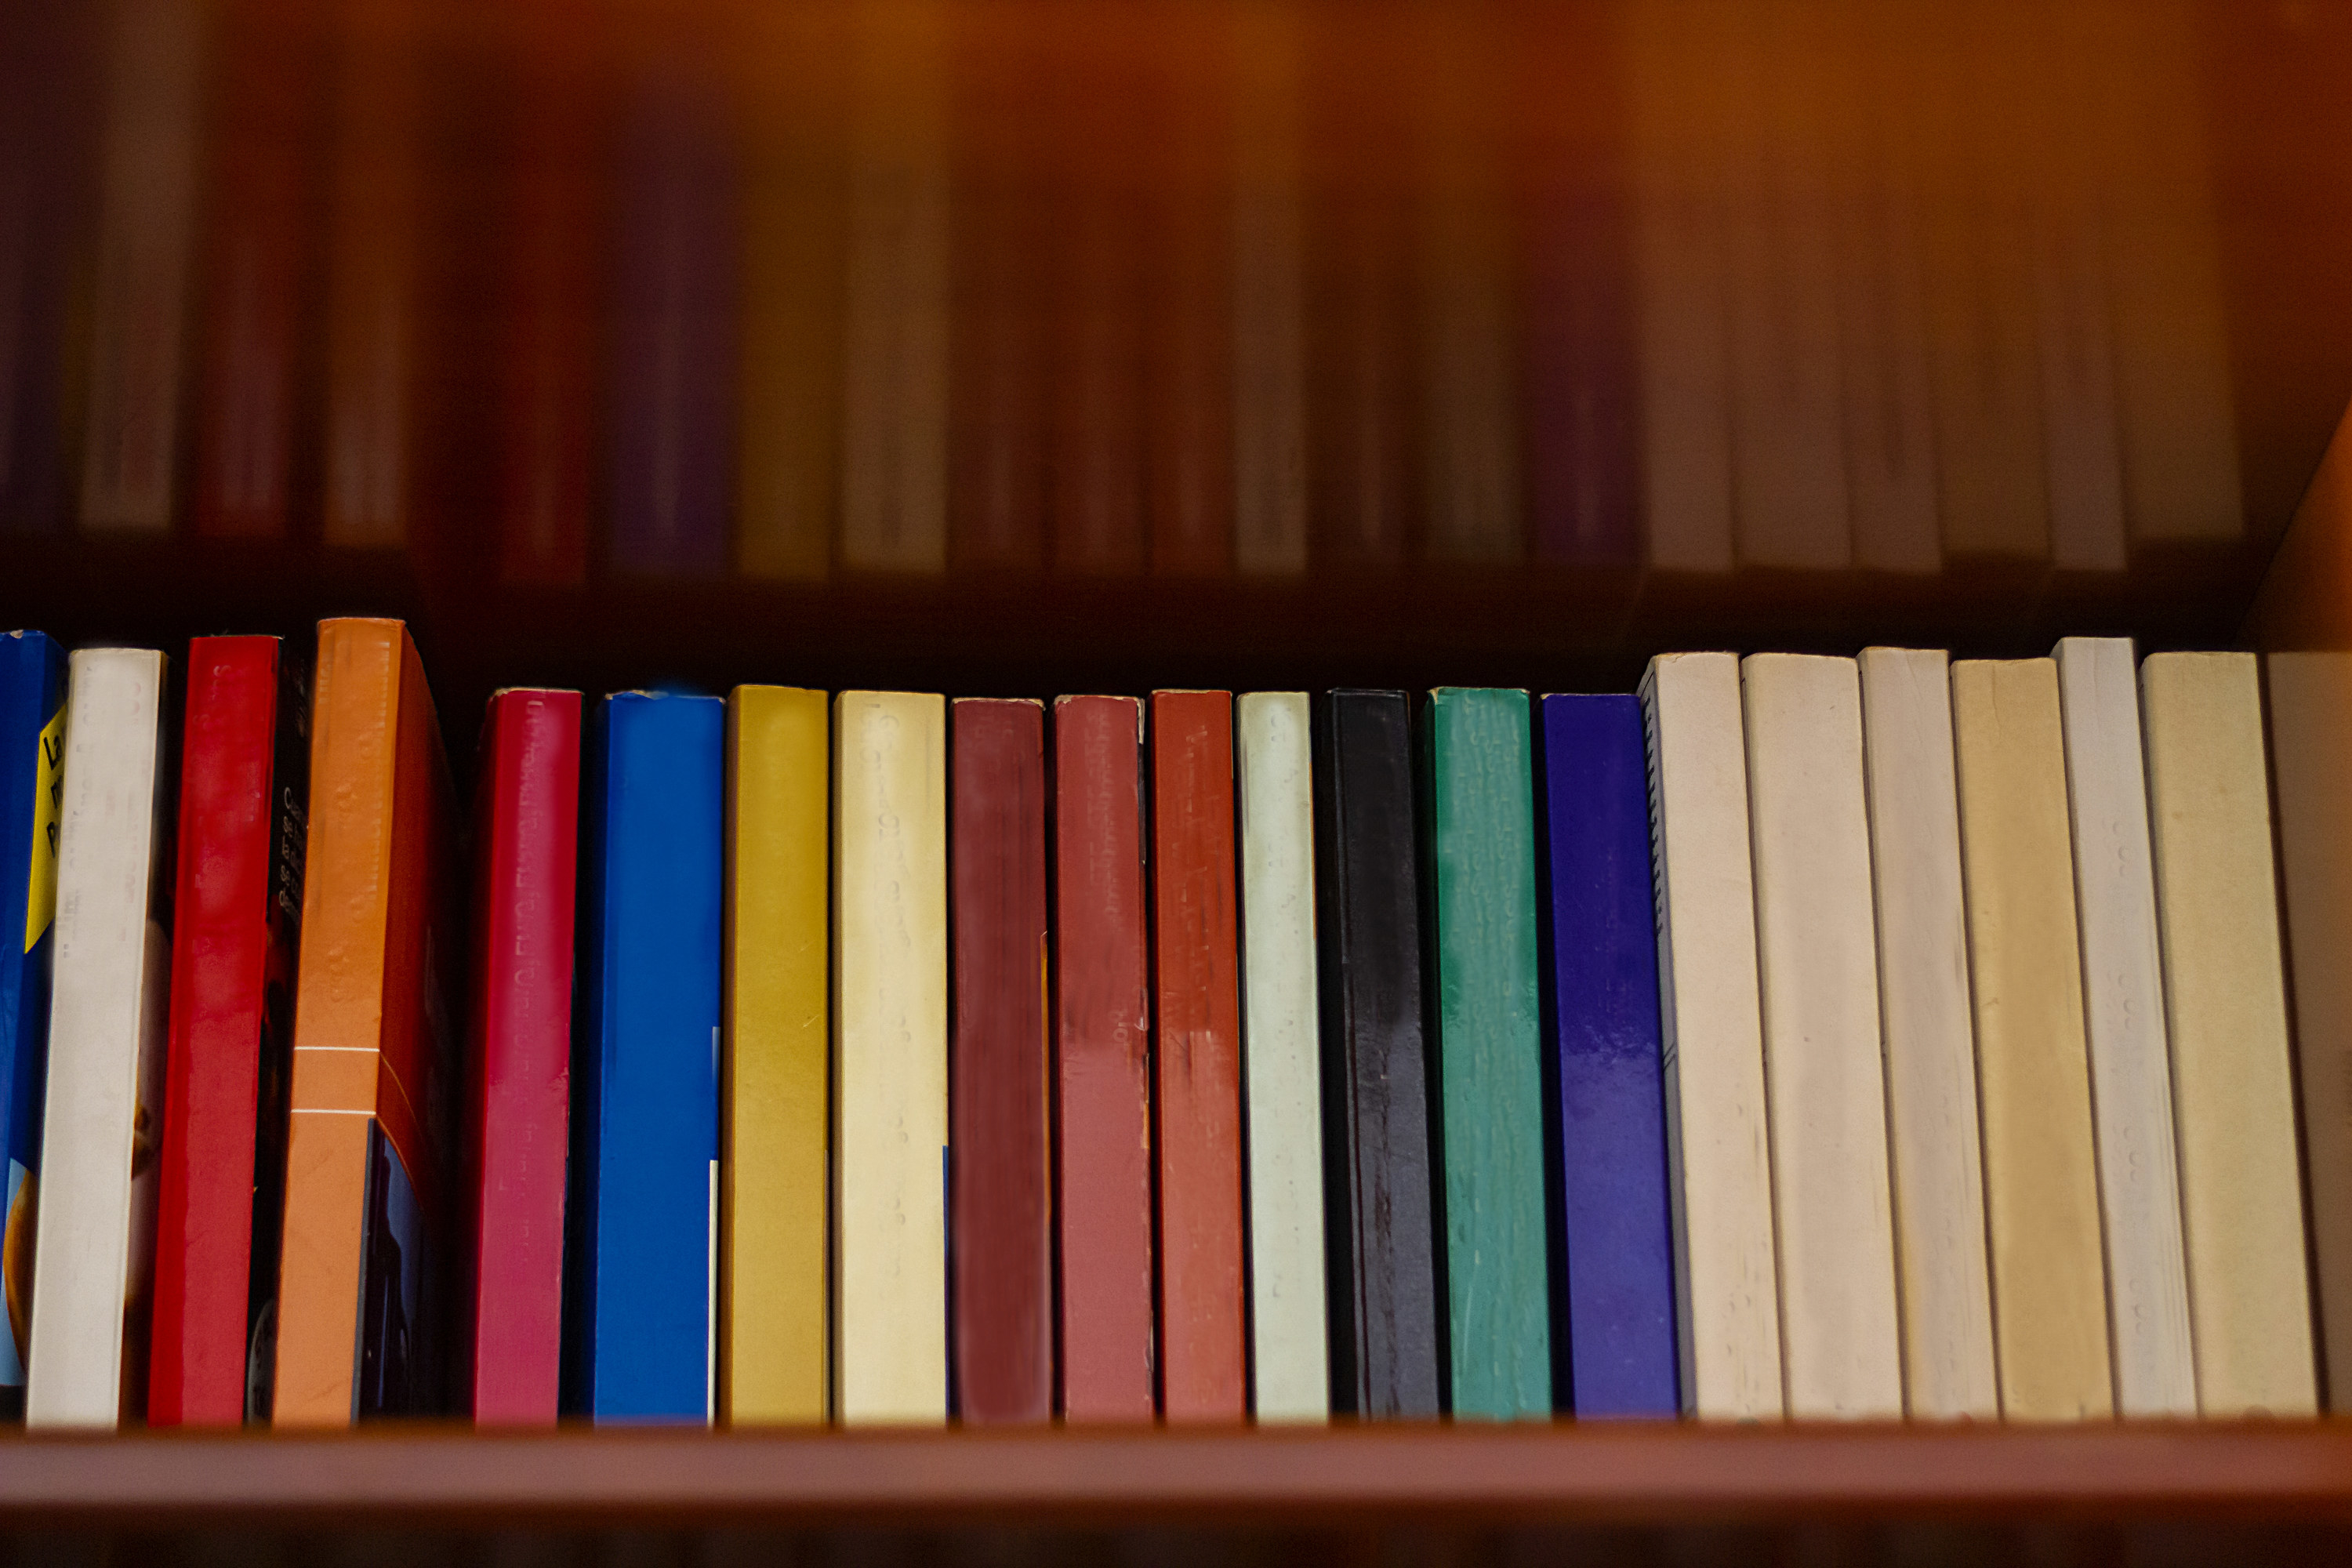 Bookshelf full of books of different colors